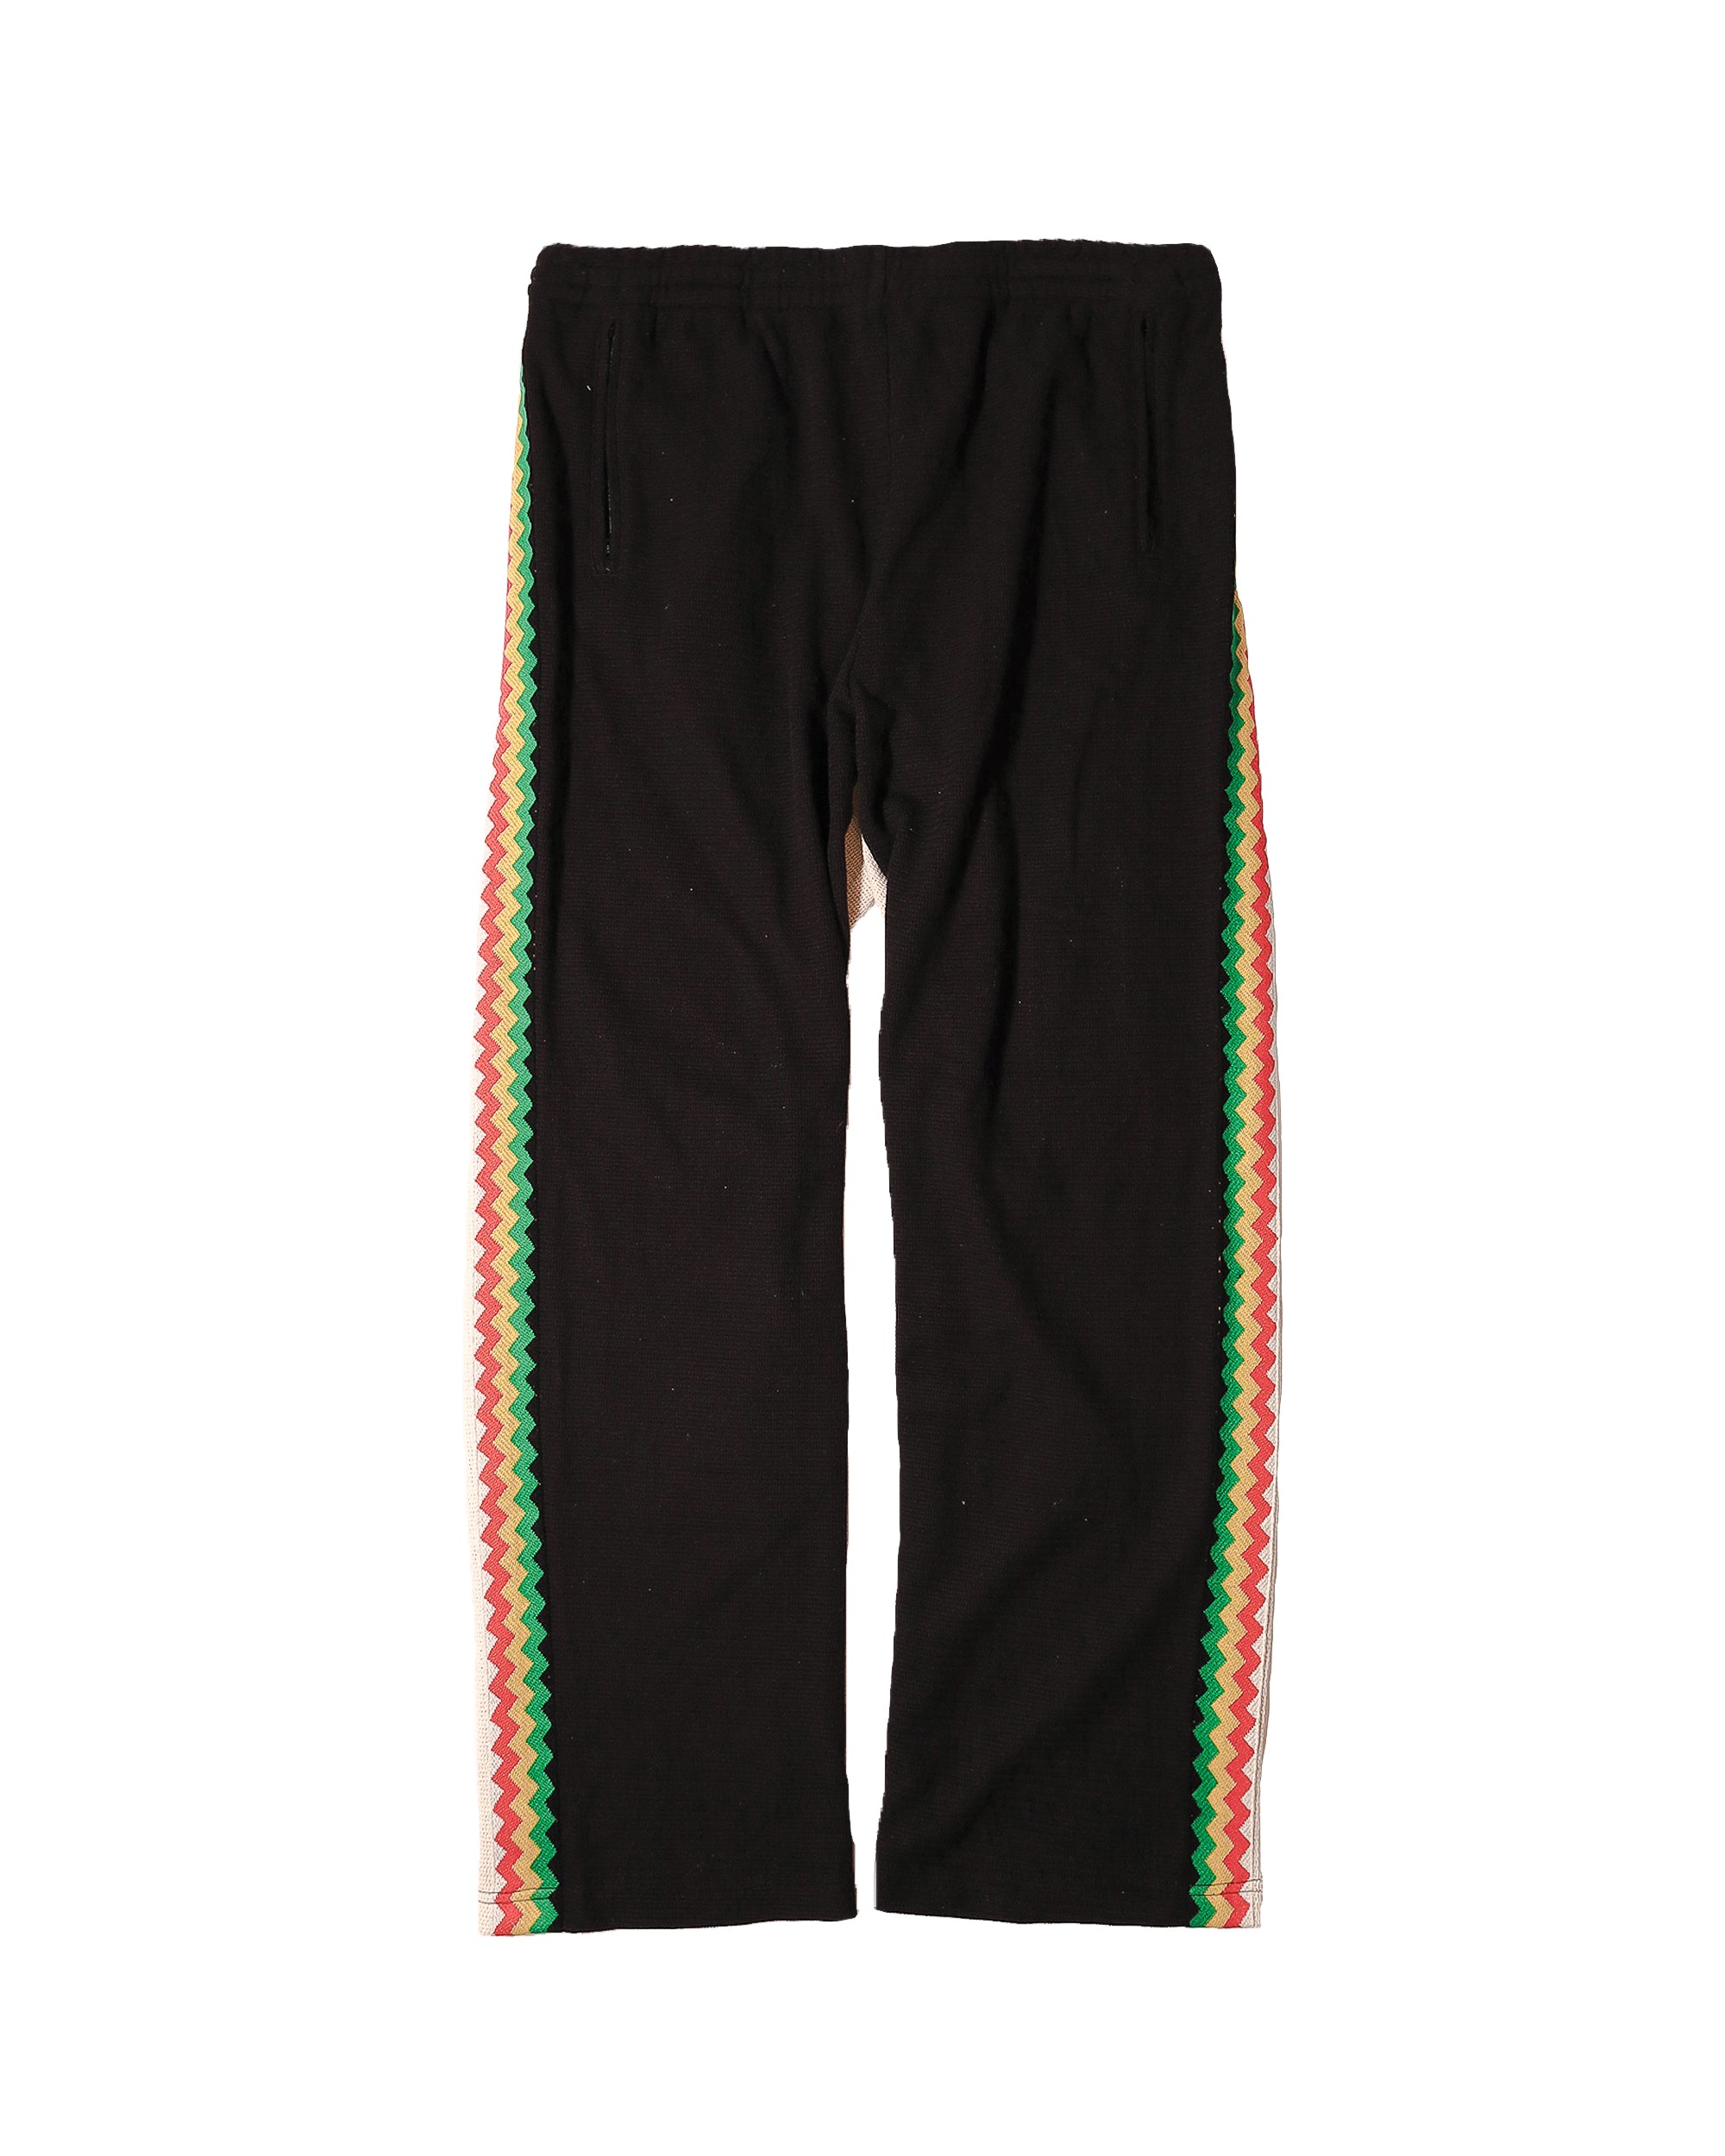 Crochet Tracksuit Pants - 50/50 - Black / Natural